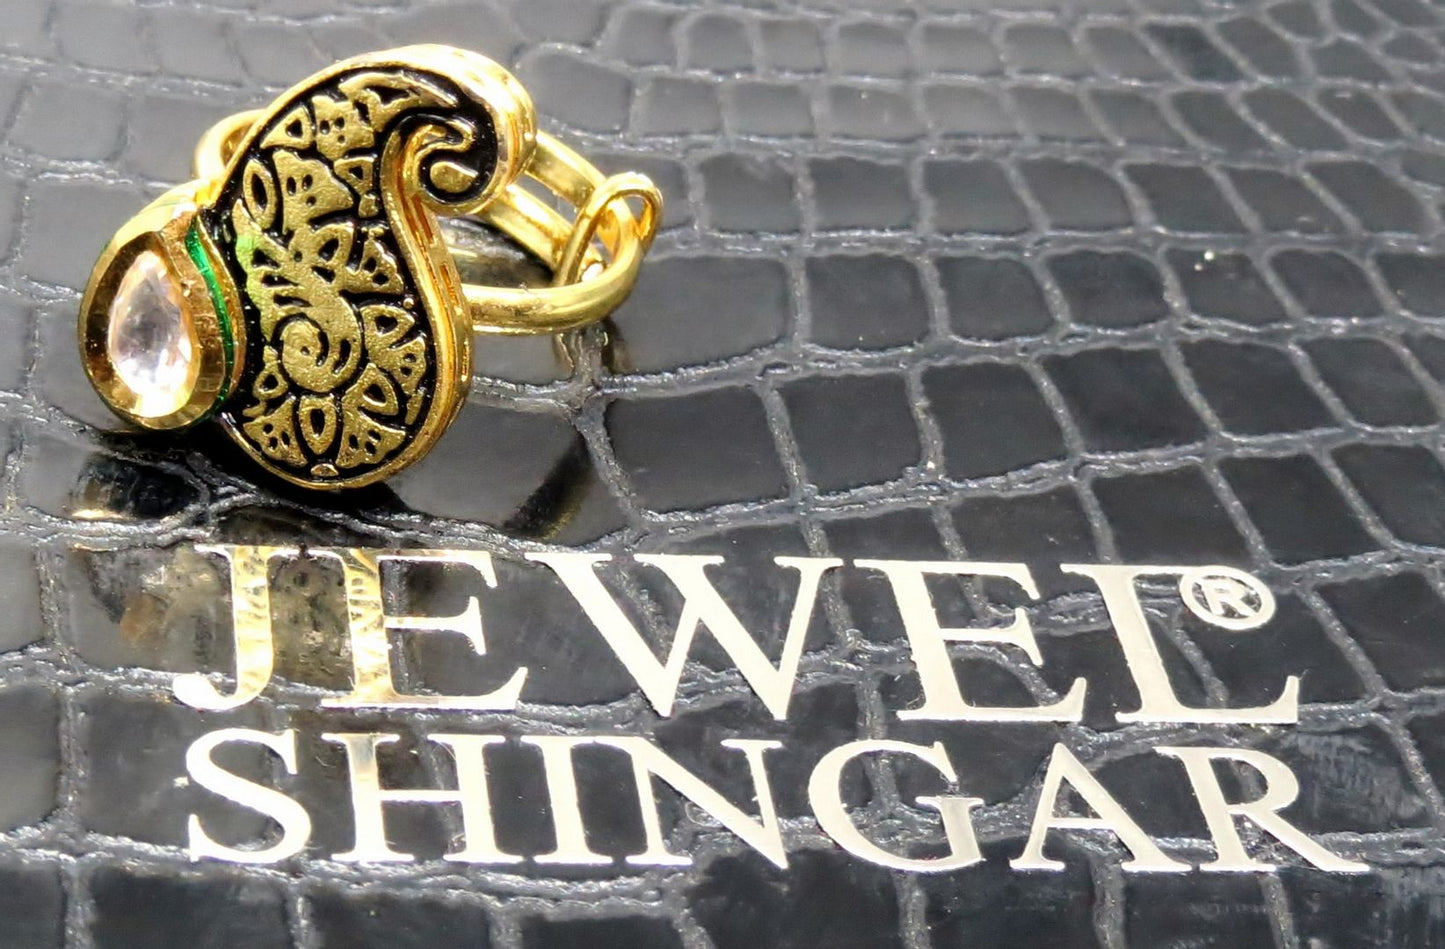 Jewelshingar Jewellery American Diamond Black Colour Size Freesize Gold Plated  Ring For Girls ( 93835FSR )